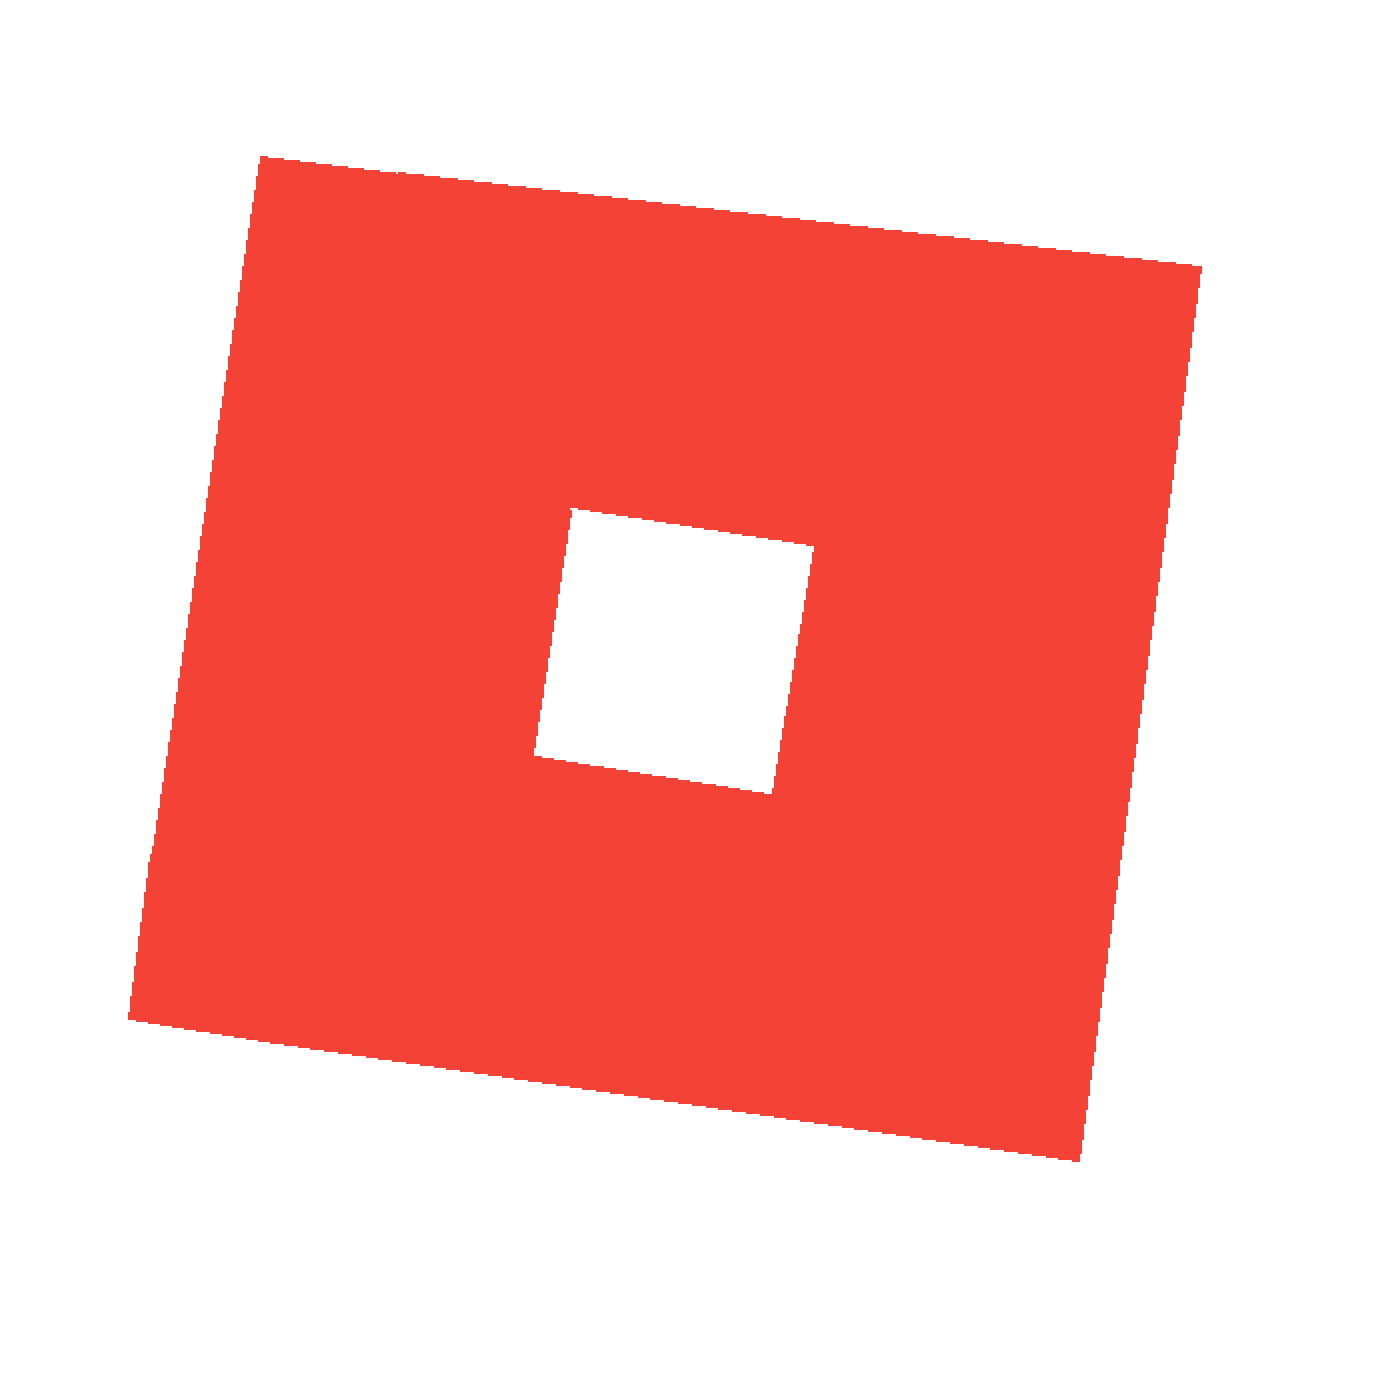 Roblox Logo Emoji Copy And Paste Free Roblox Gift Card Codes 2019 September Full - bear pixel roblox logo